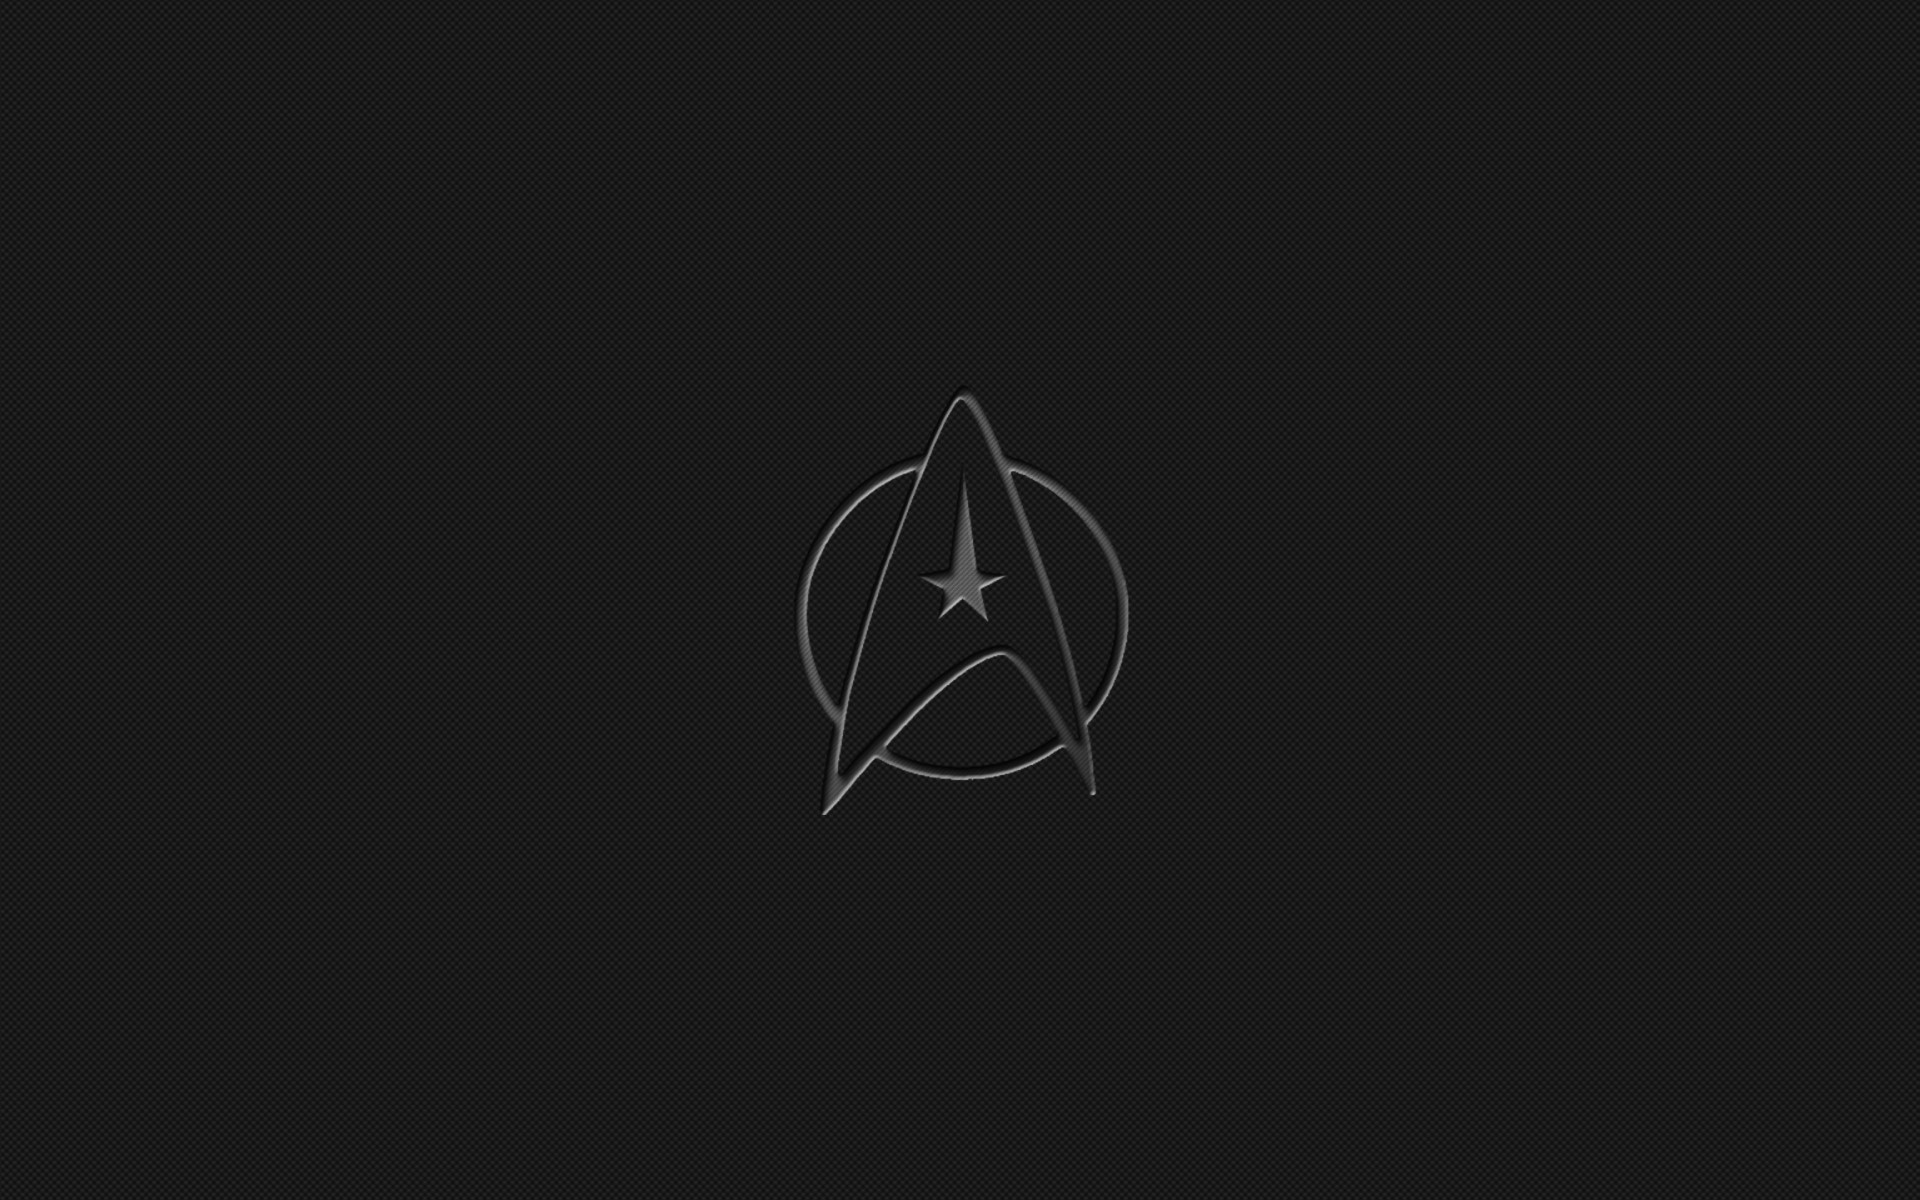 1920x1200 Star Trek Logo Desktop Background Â· Download Â· Logos ...